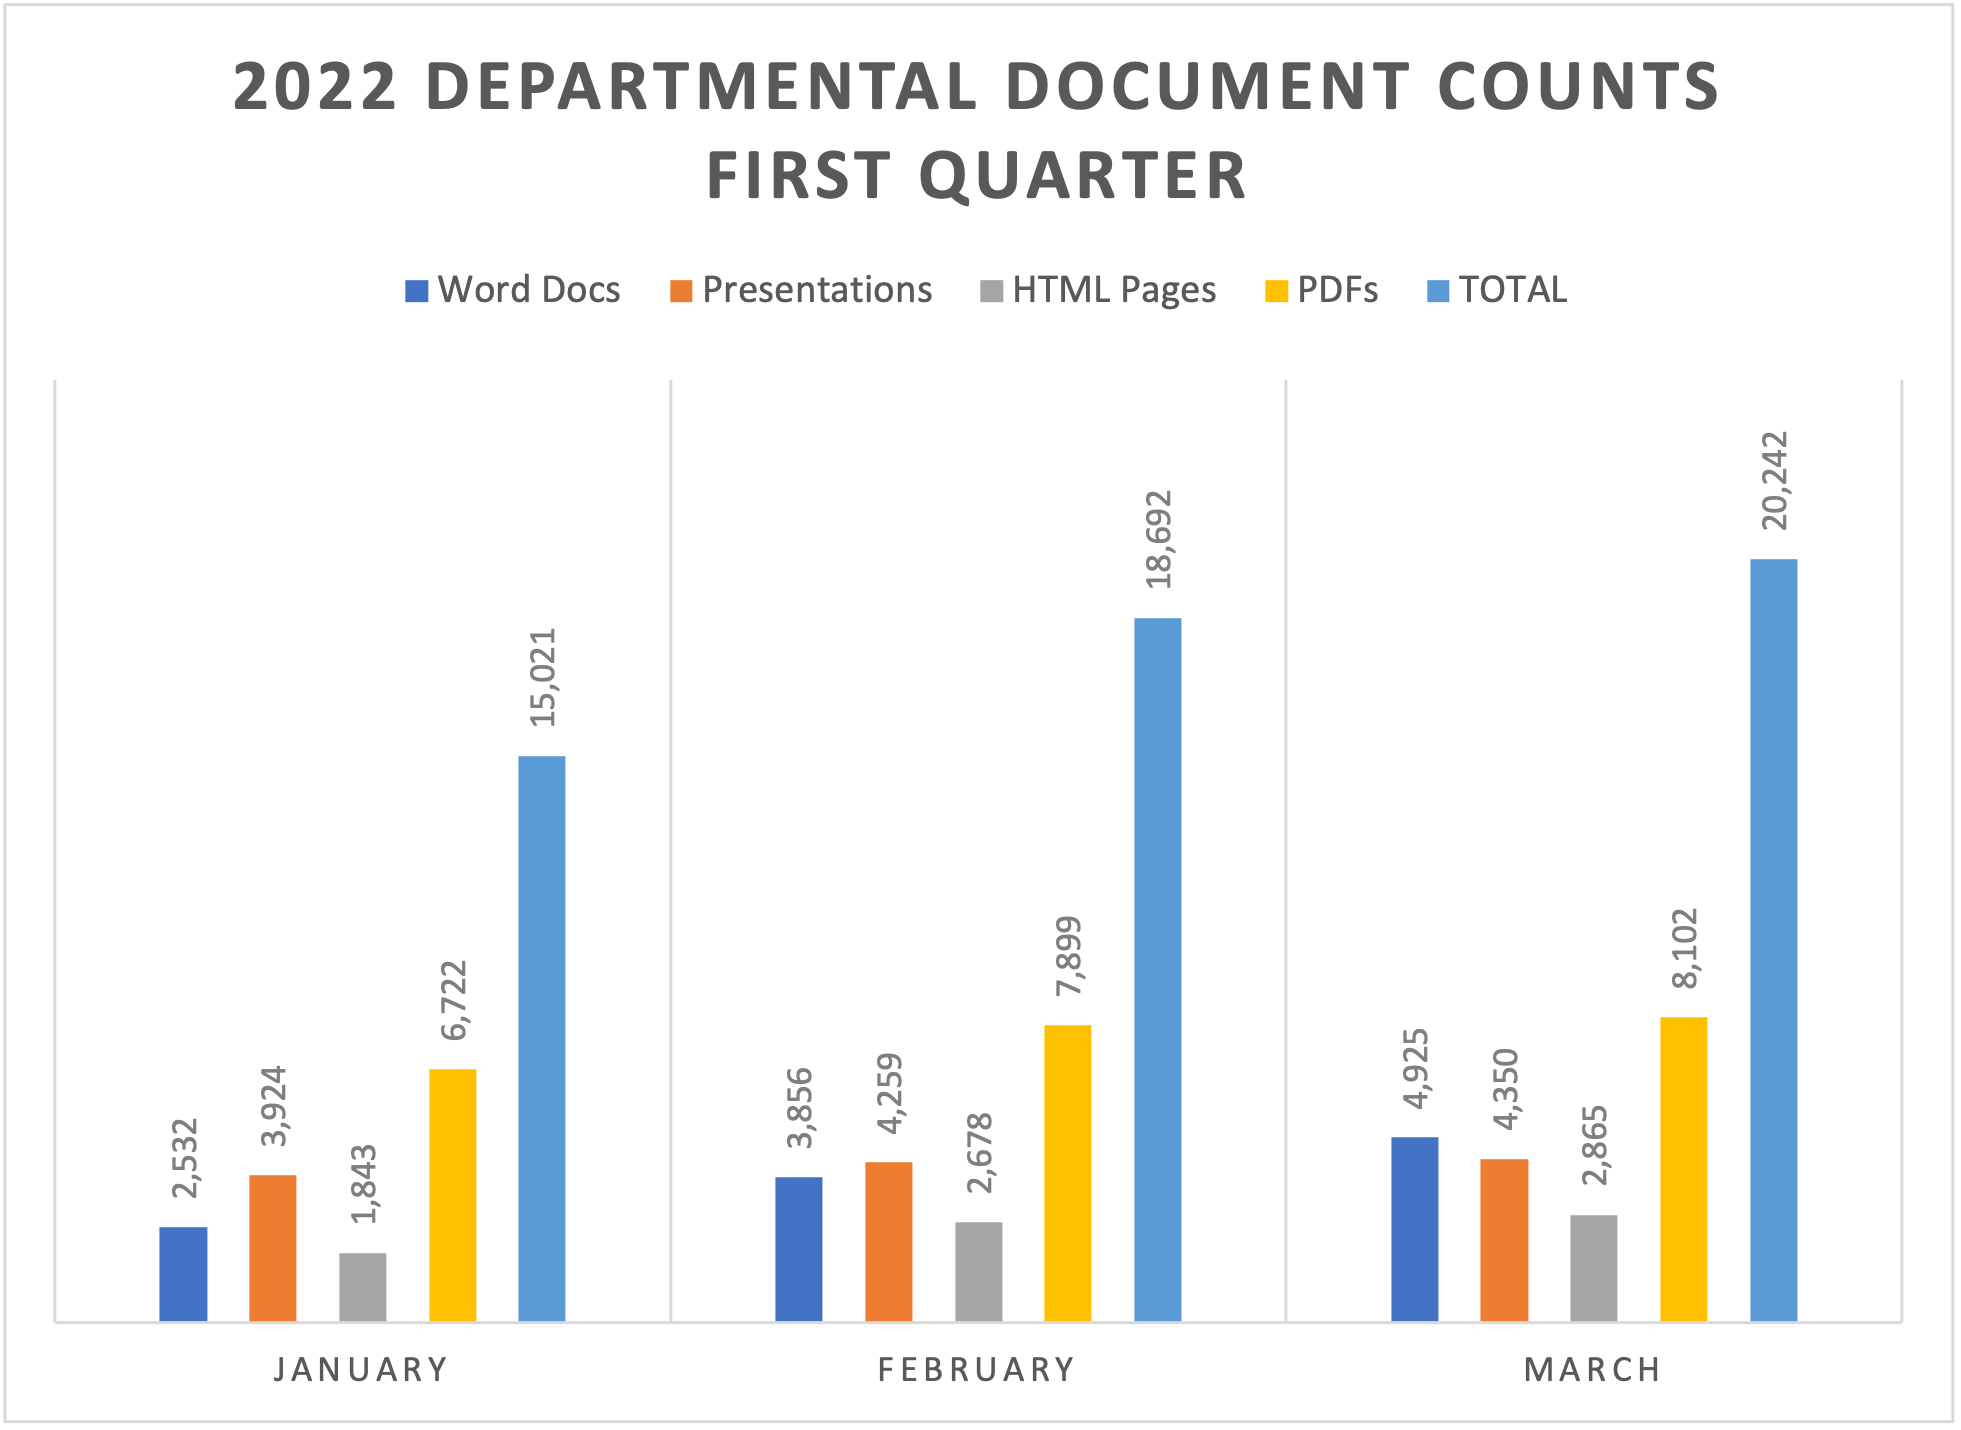 2022 departmental document counts first quarter bar chart.  Long description linked under image.